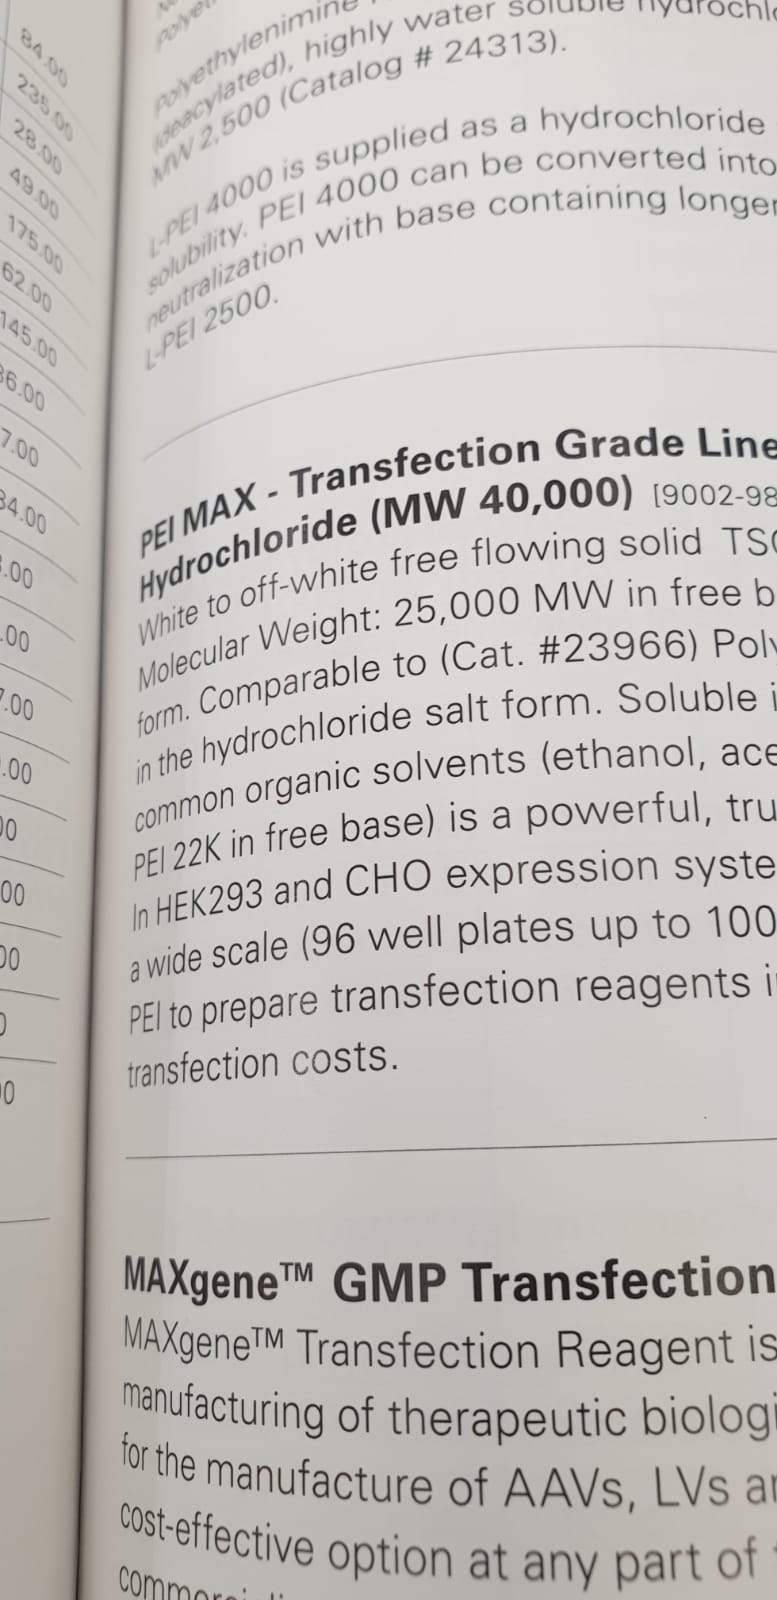 PEIMAX-Transfection Grade Line